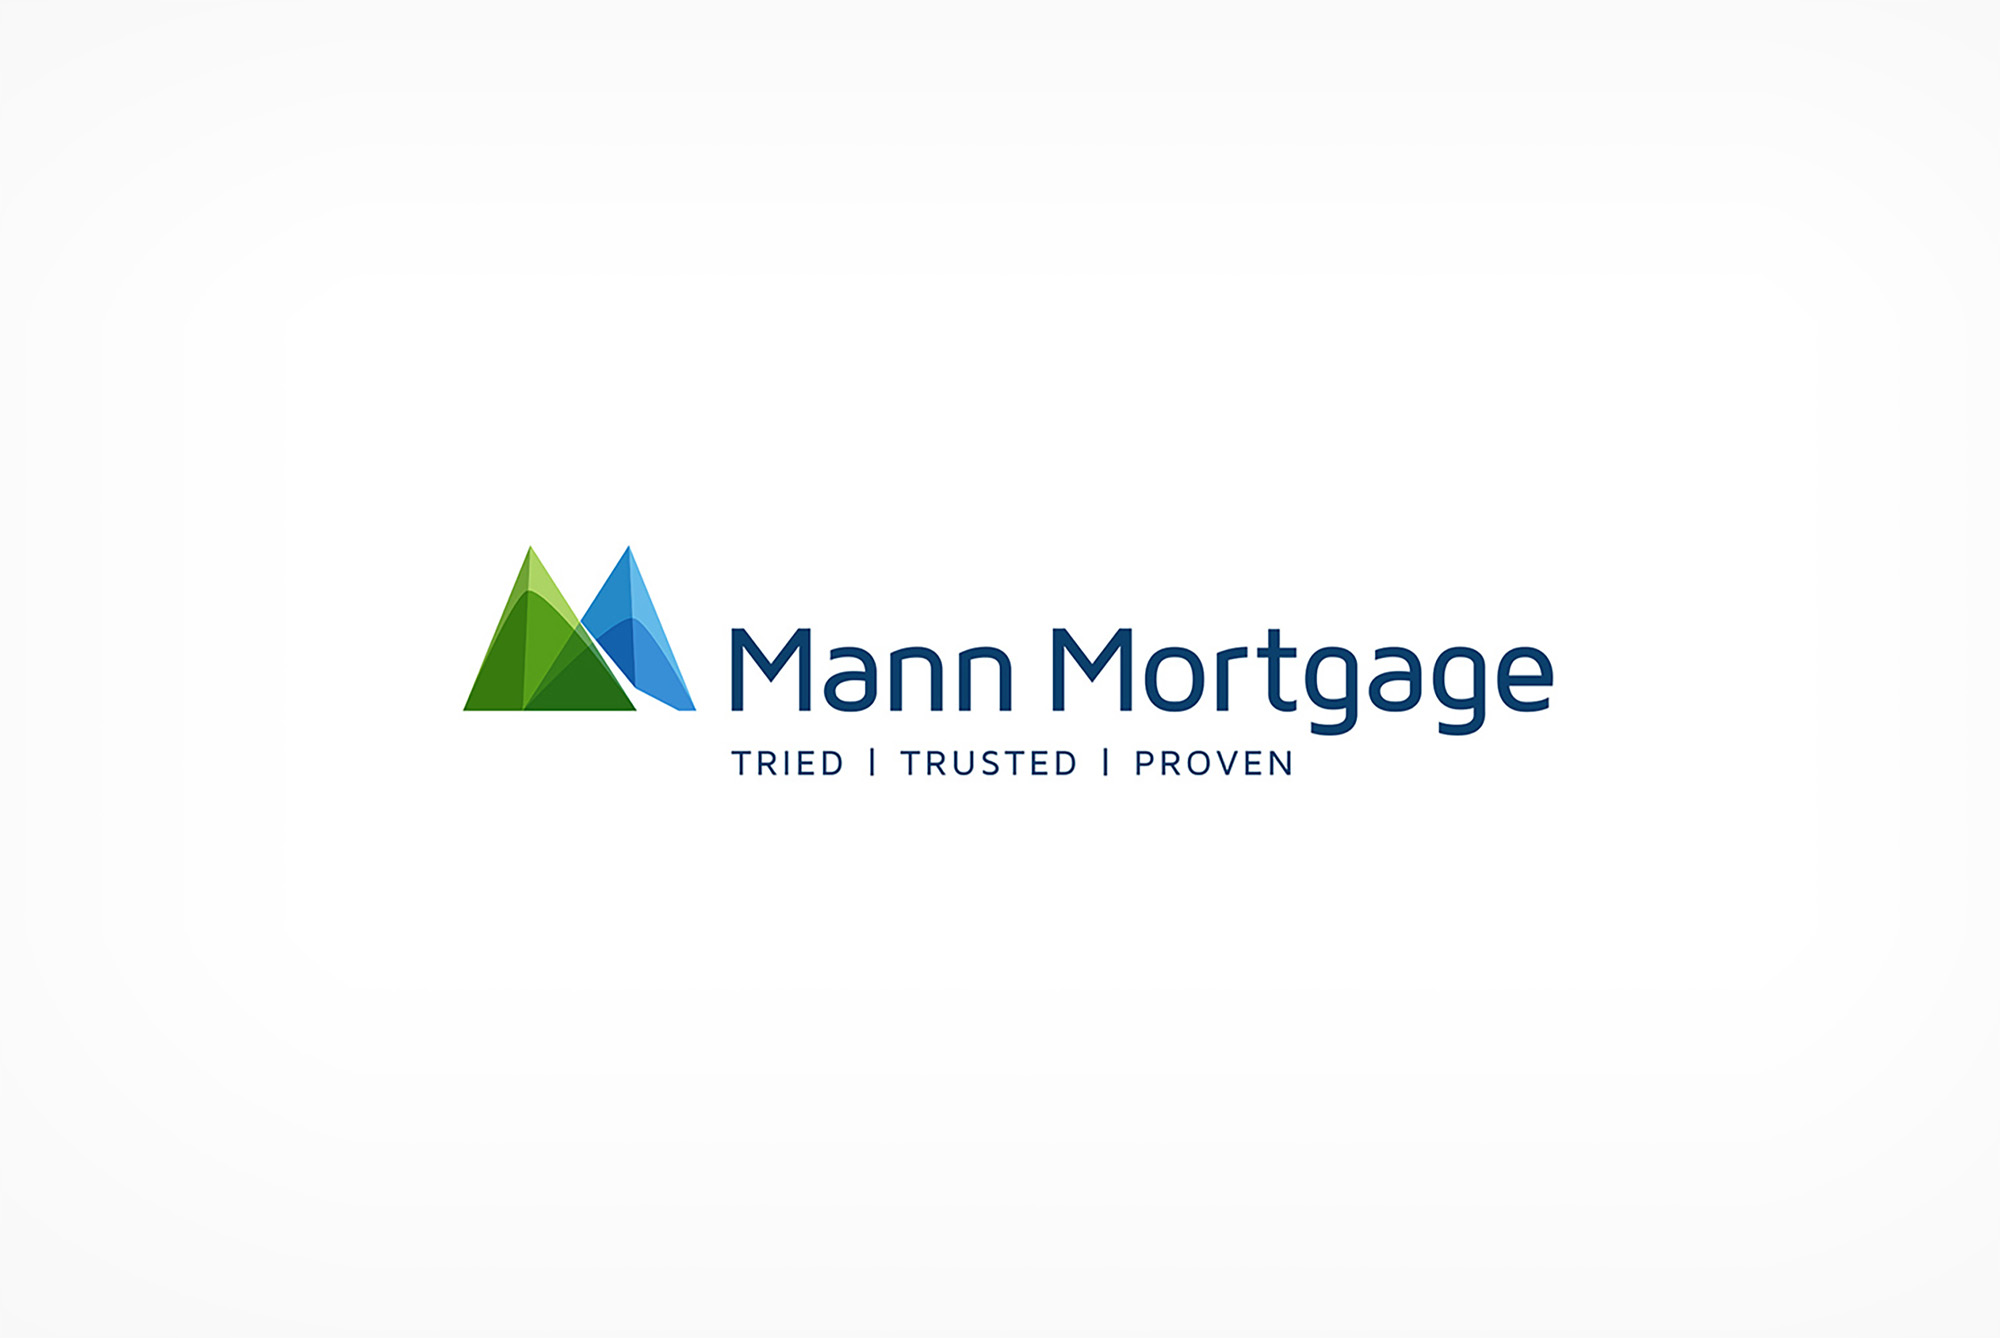 Mann Mortgage brand logo redesign.